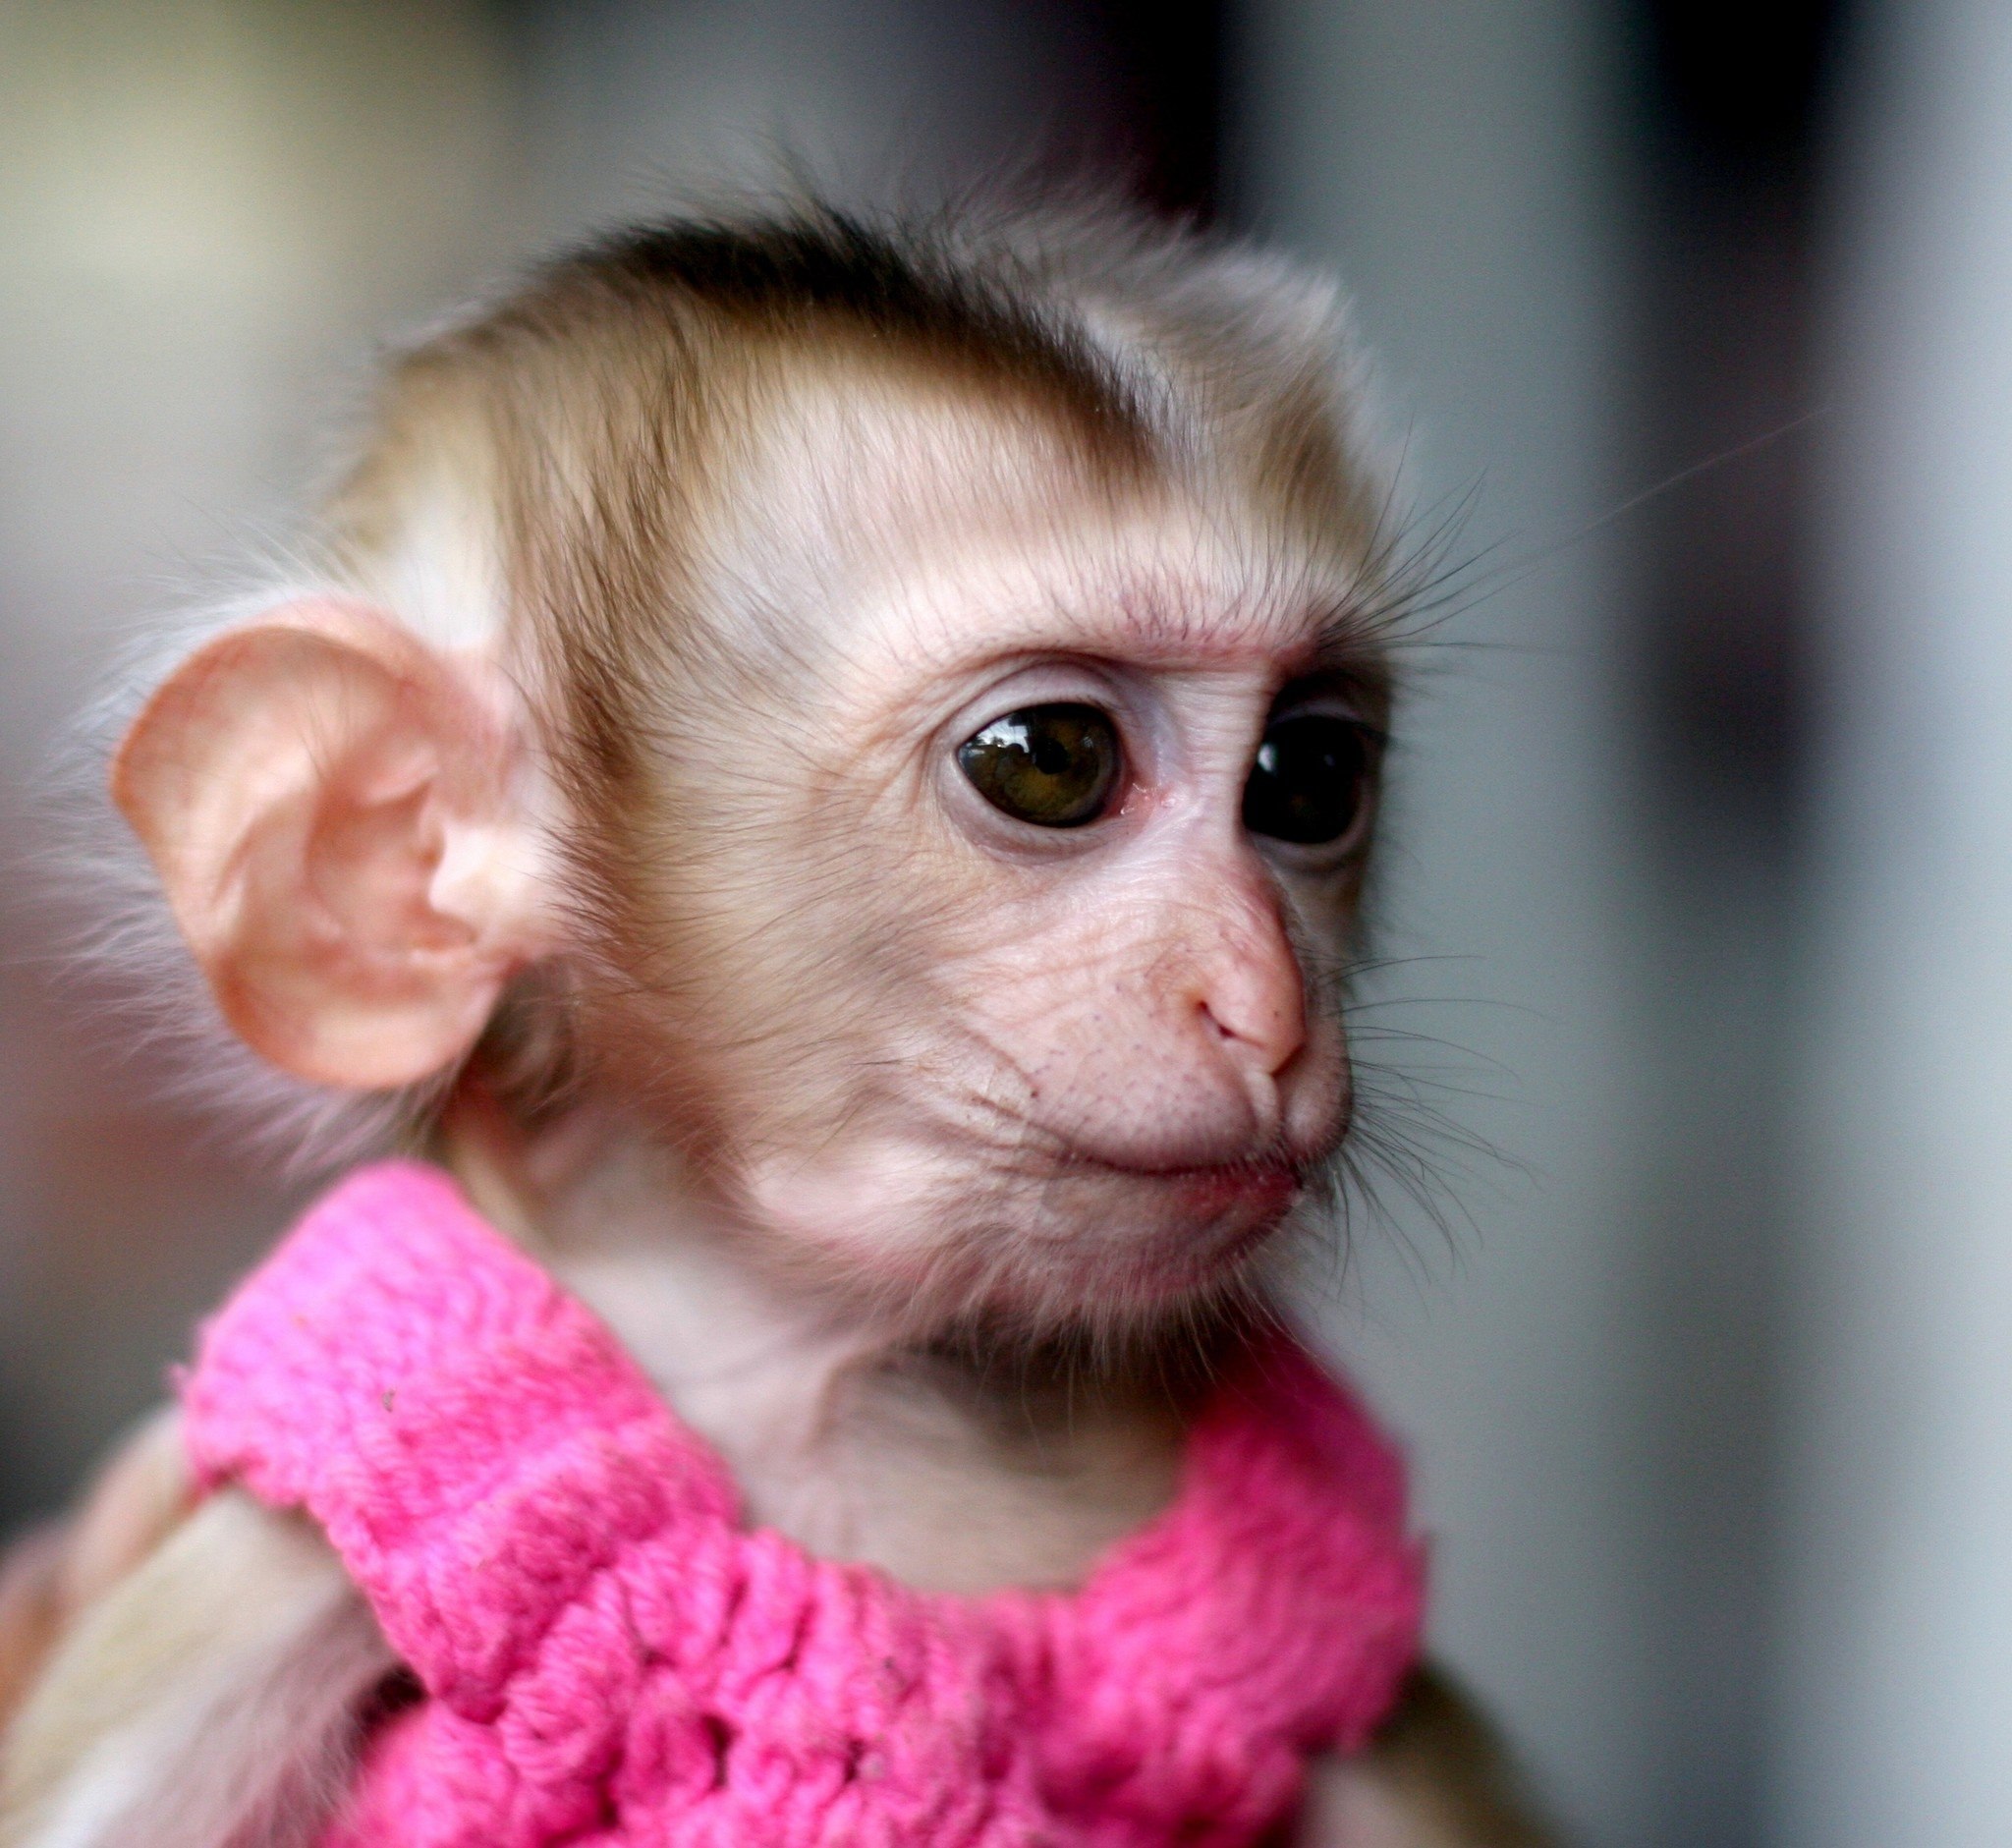 Фото смешной обезьянки. Меймун макаки. Милая обезьянка. Смешные обезьянки. Красивая обезьяна.